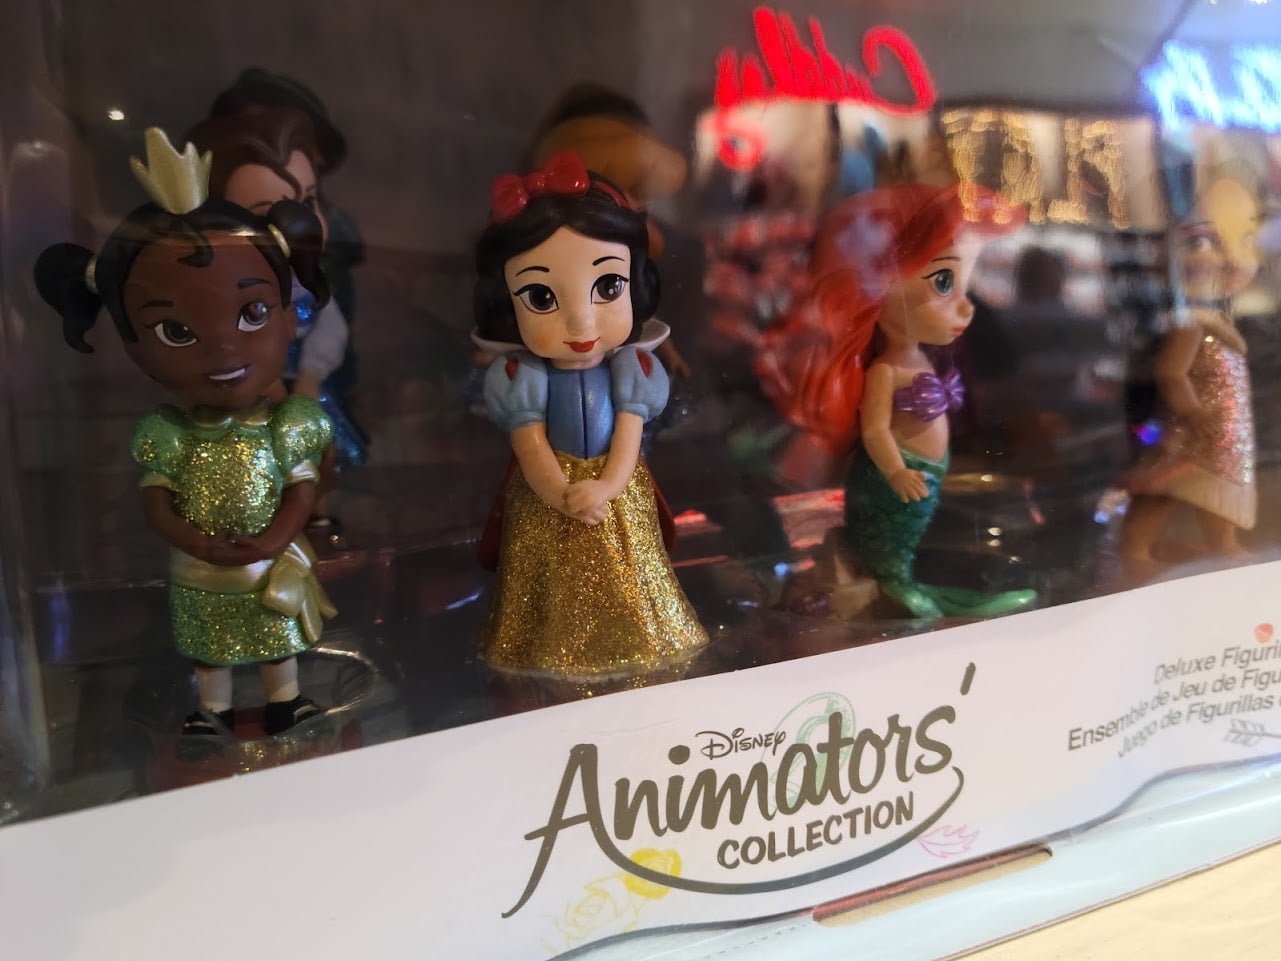 Disney Animators' Collection Deluxe Figure Play Set, shopDisney